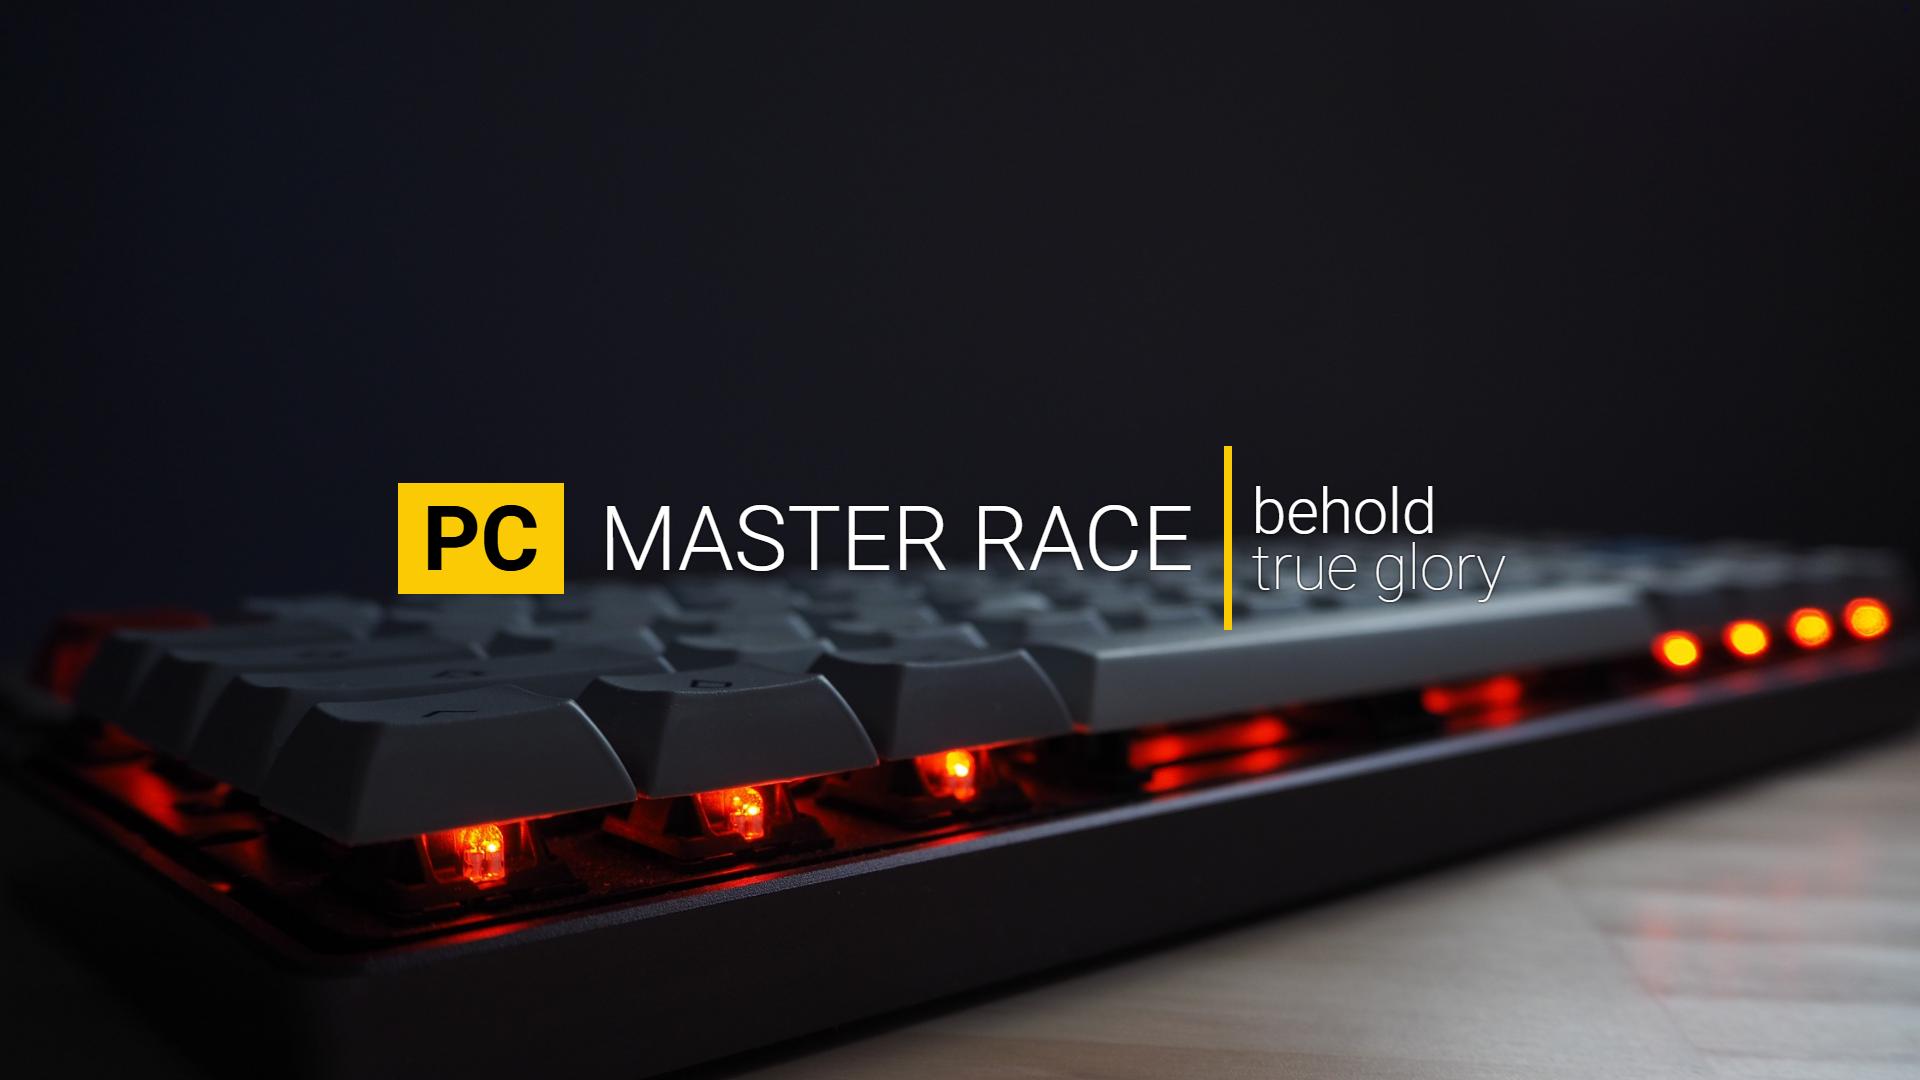 General 1920x1080 PC Master  Race mechanical keyboard technology keyboards digital art text